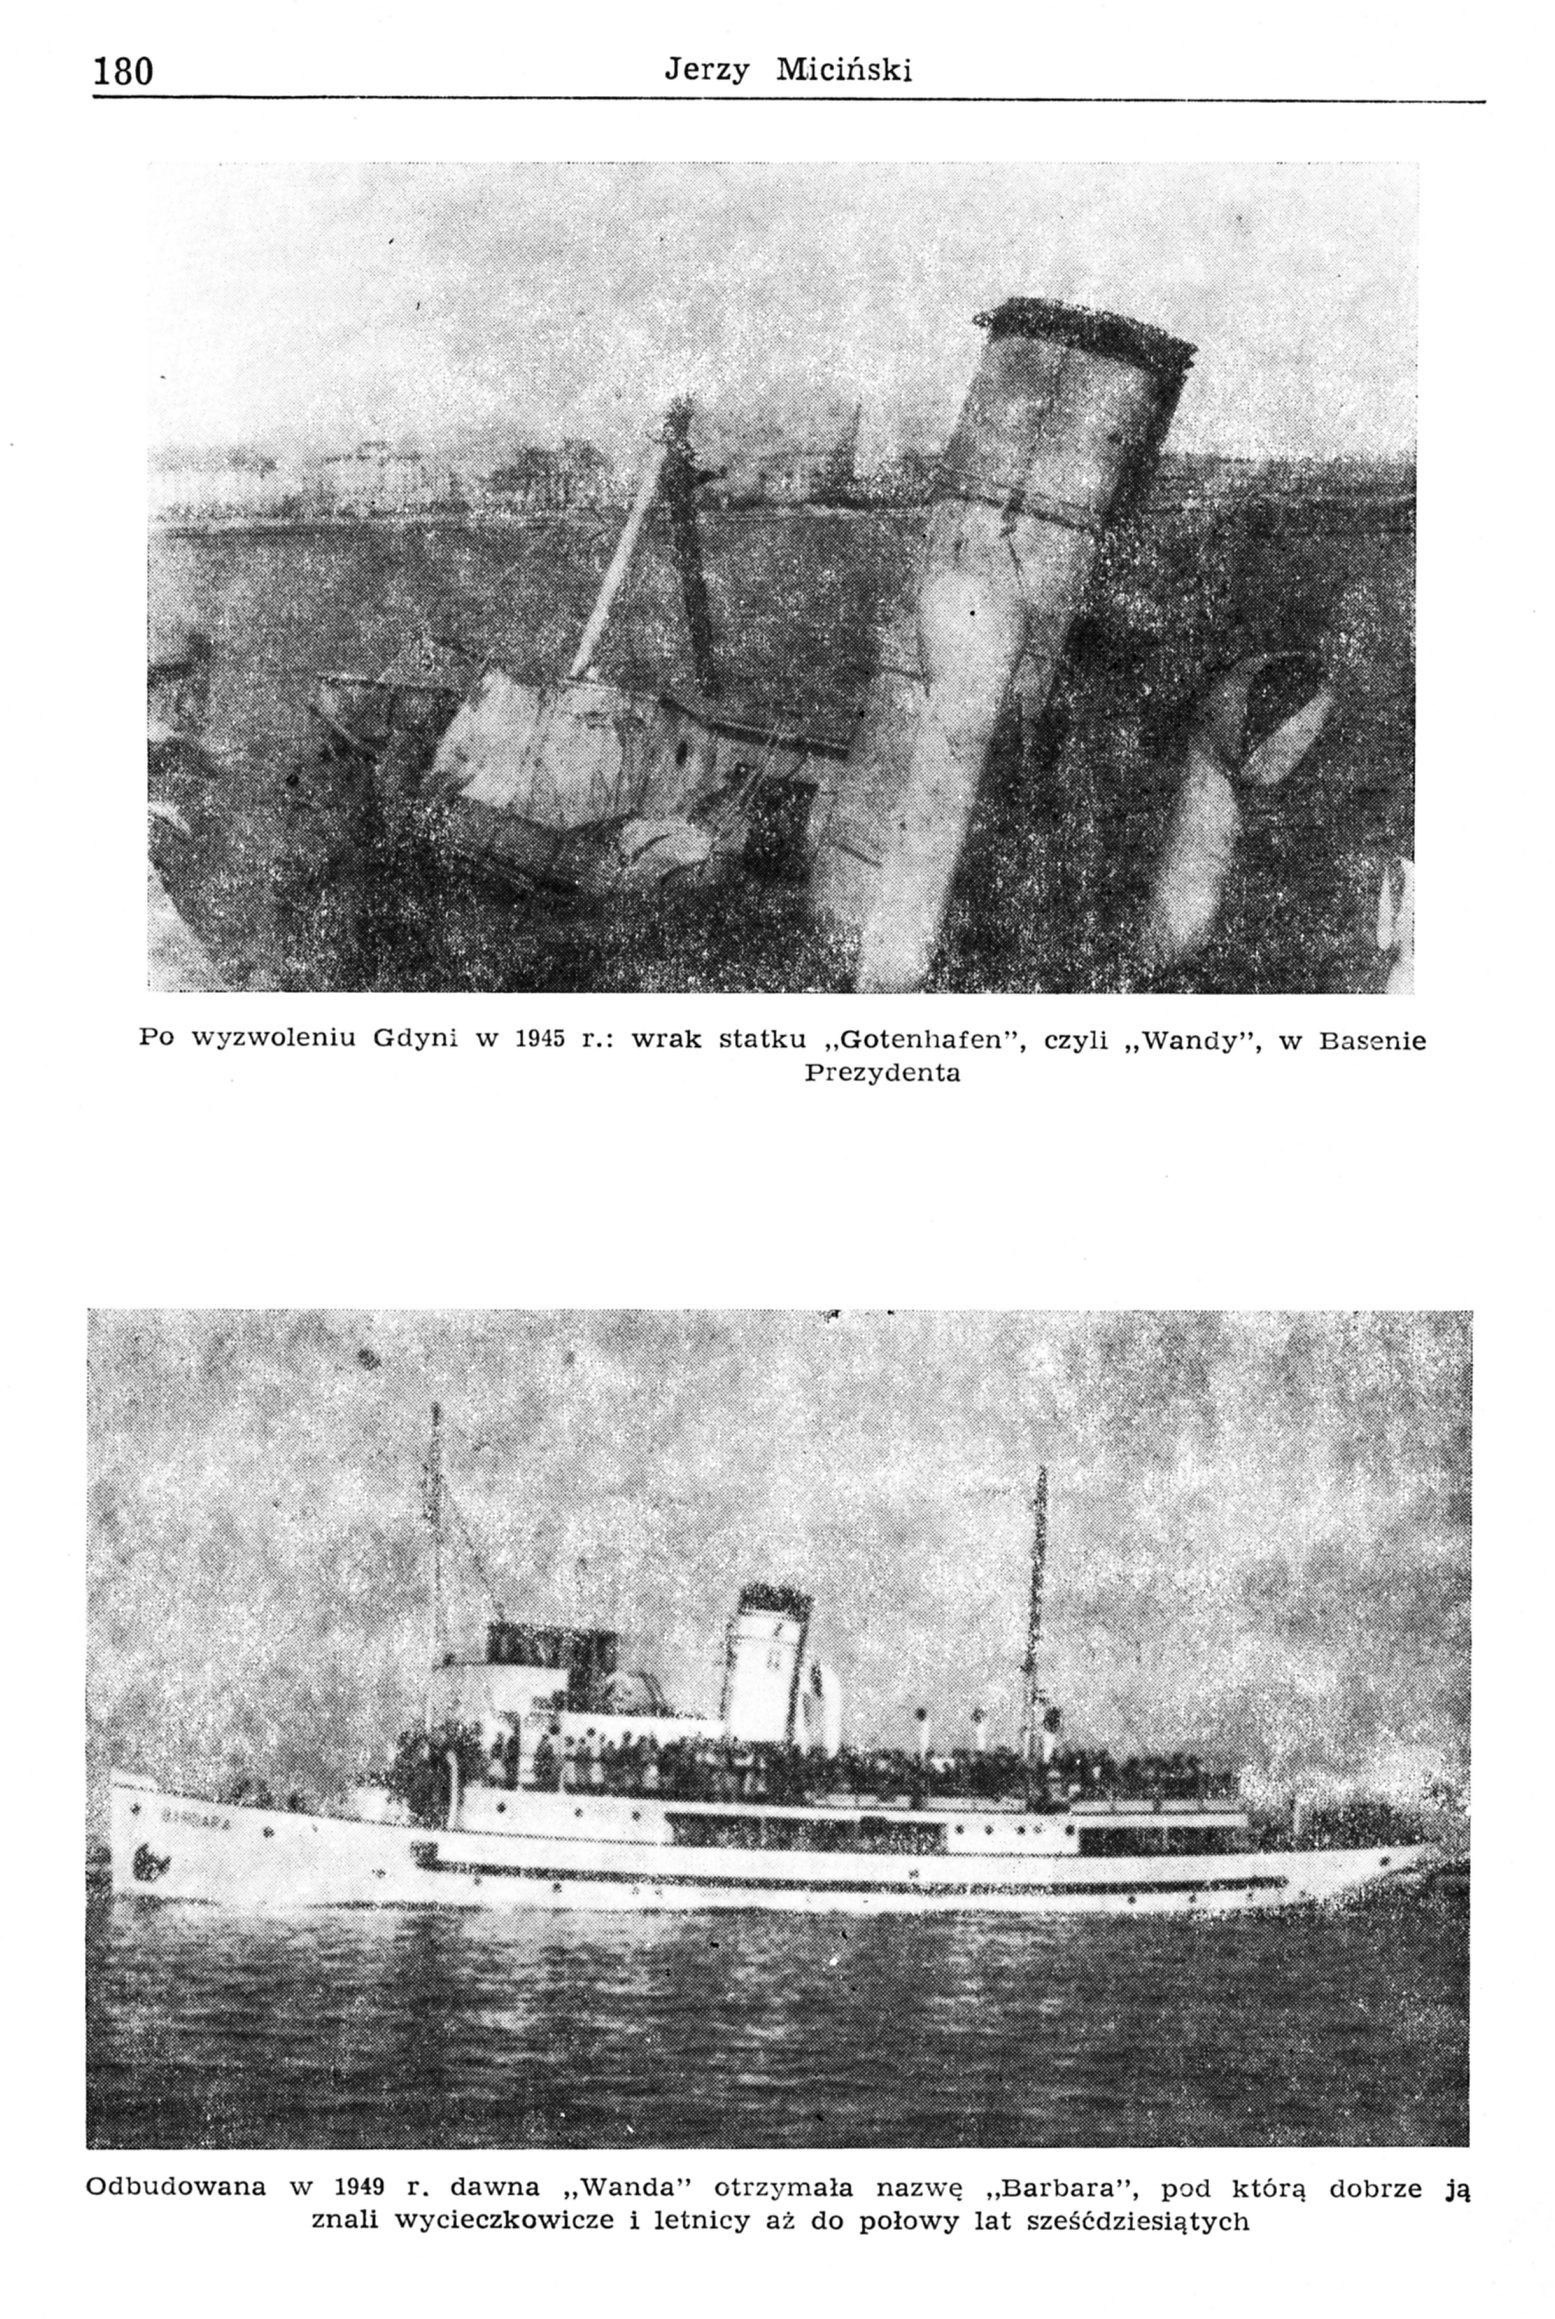 Gdyńska biała flota 11926-1939 (3)